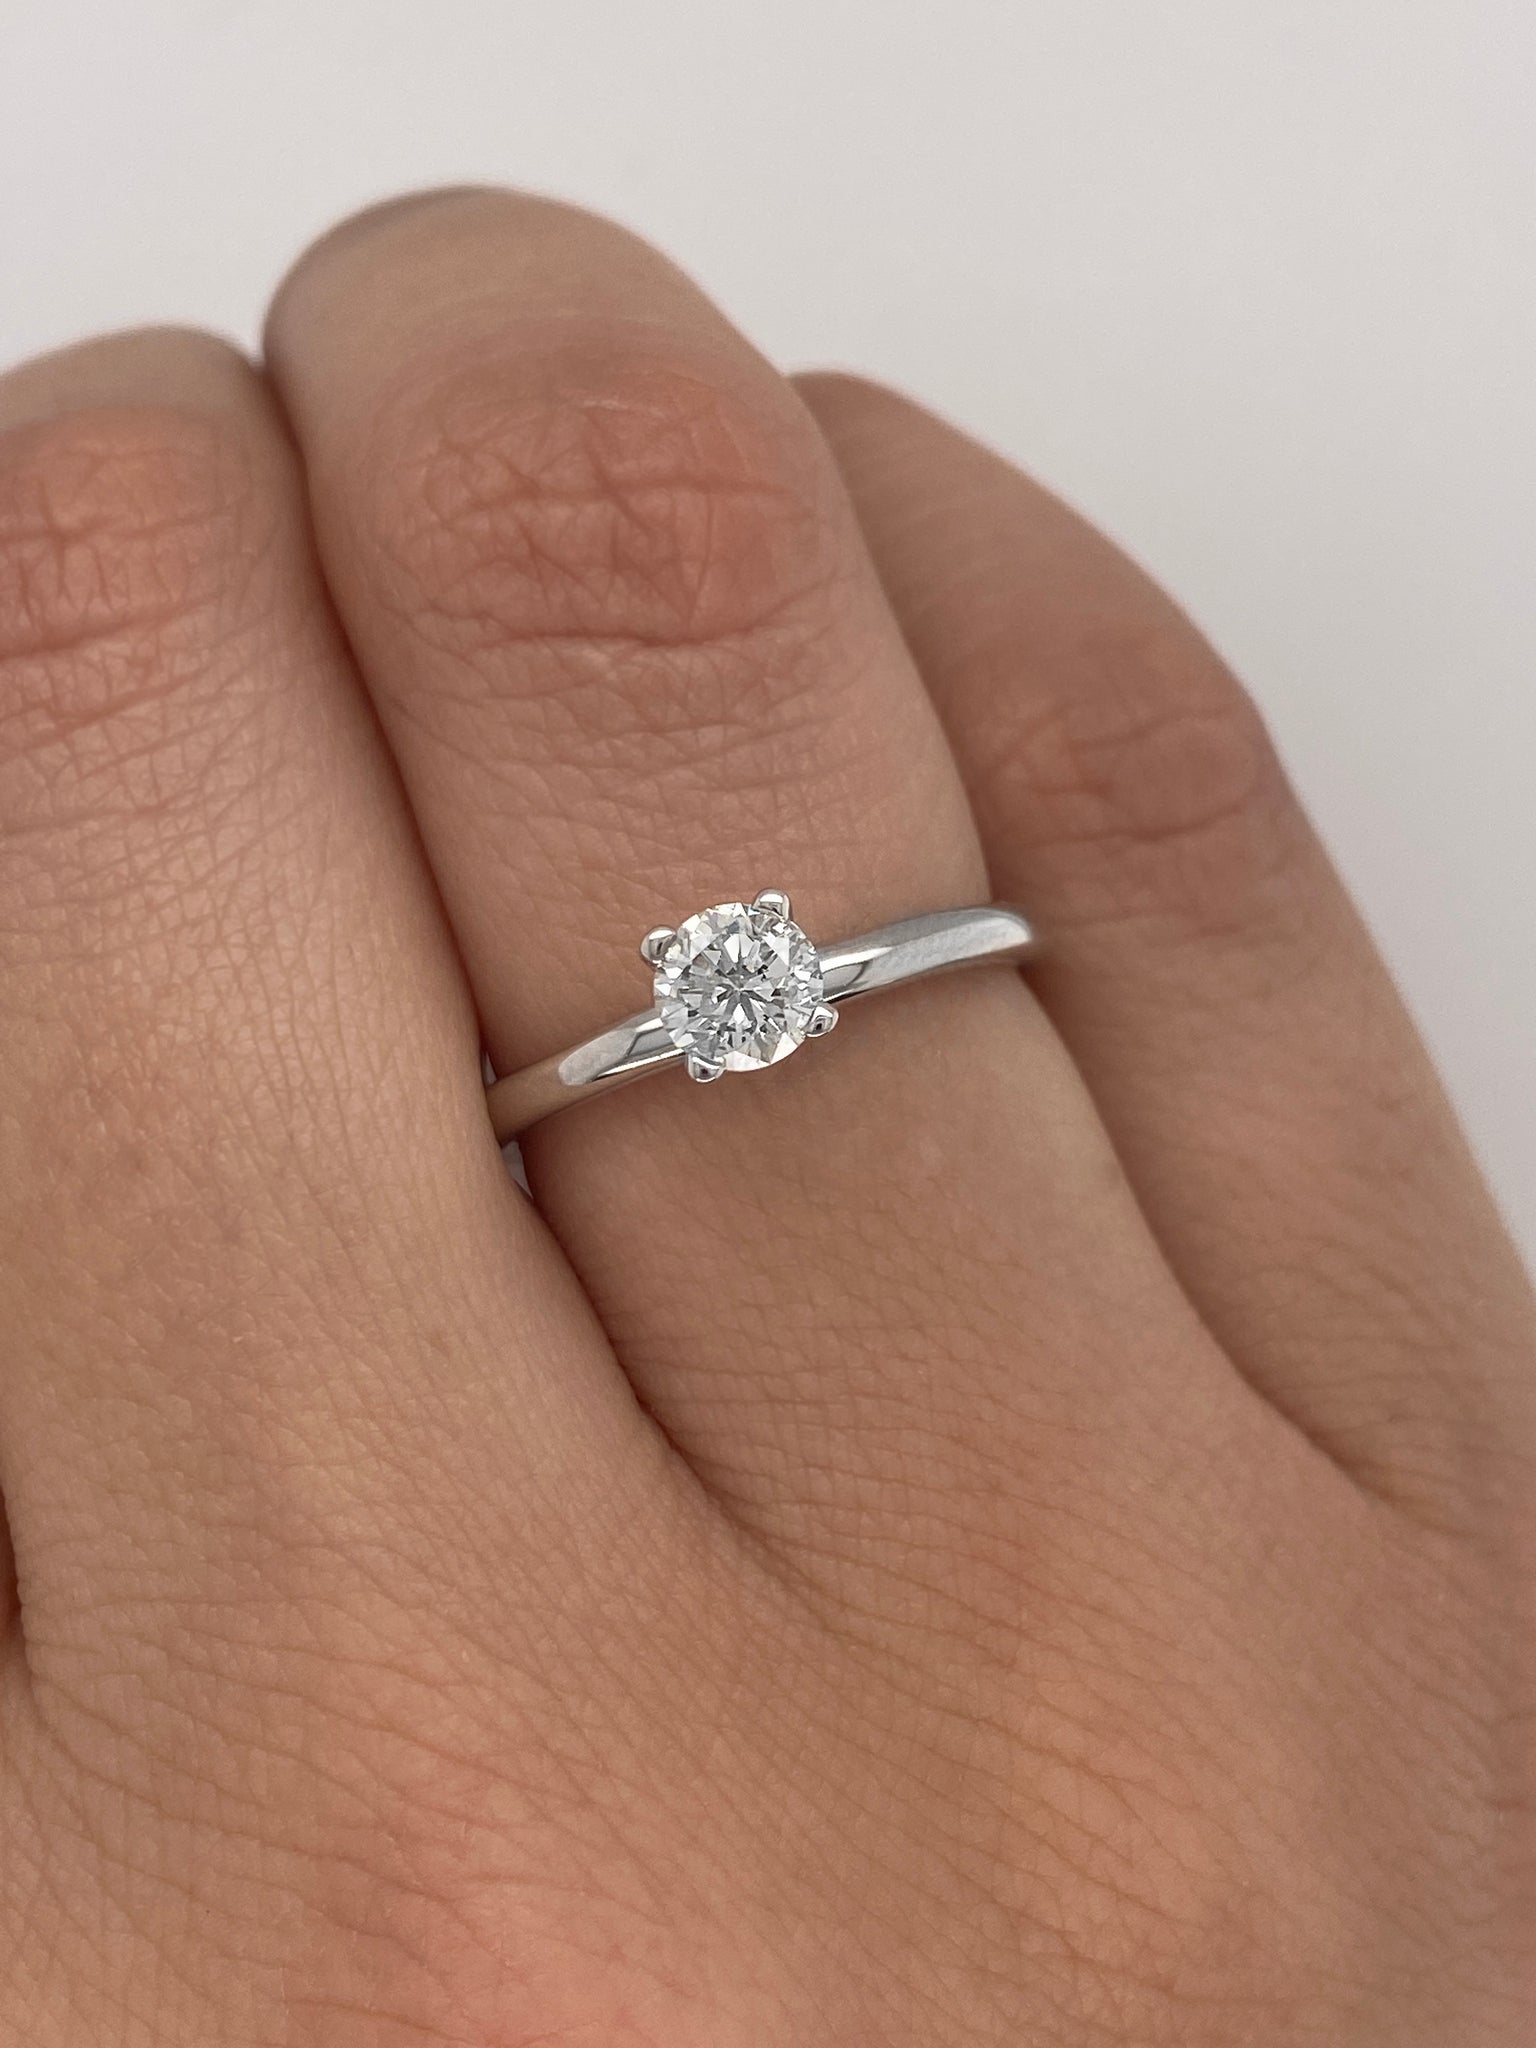 0.50 Ct Natural Round Cut Diamond Engagement Ring 14K White Gold